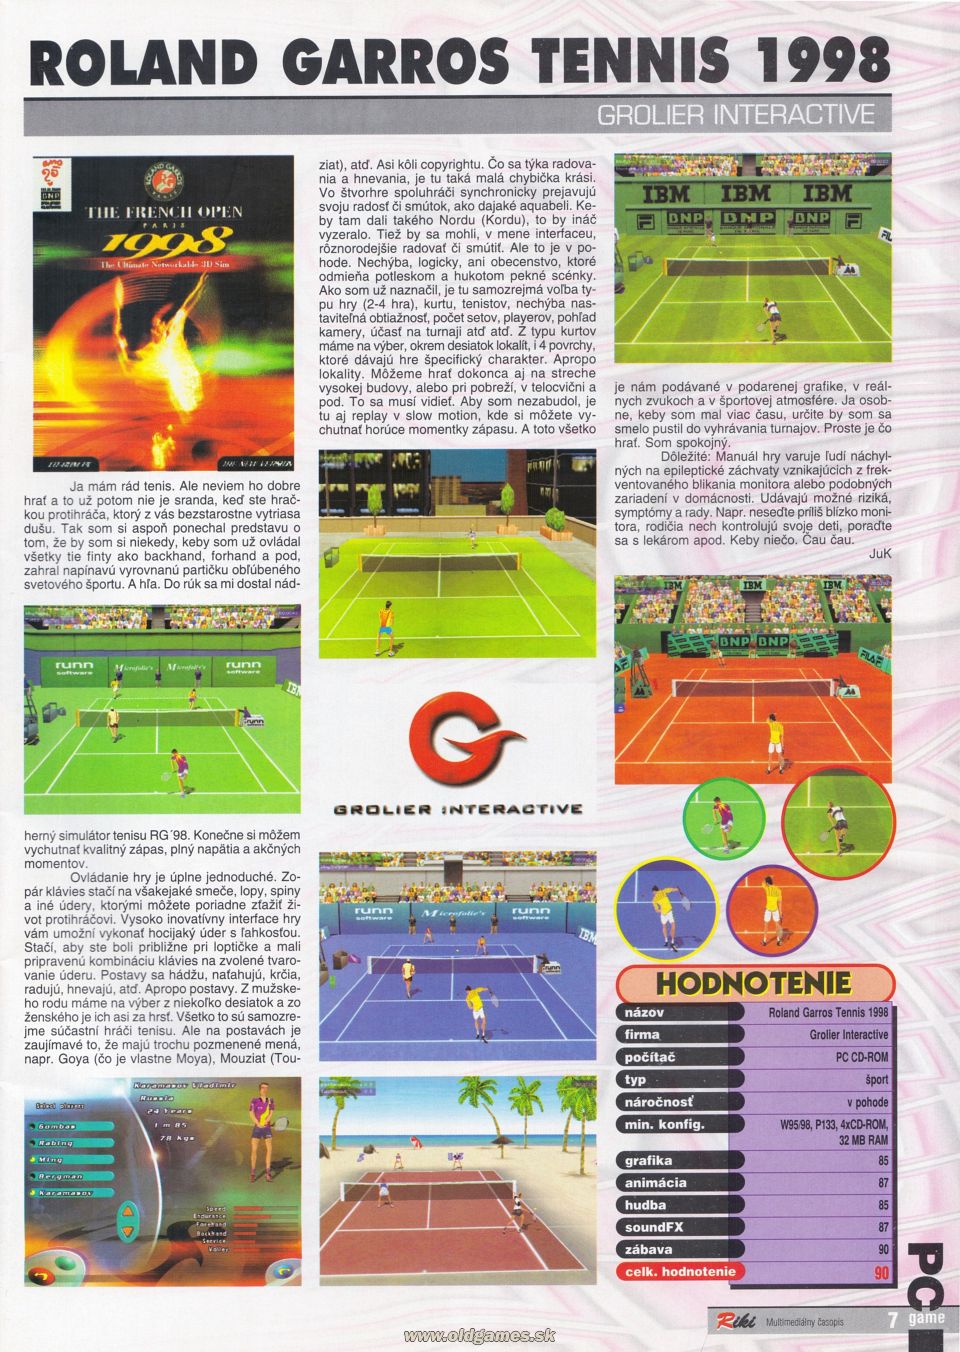 Rolland Garros Tennis 1998